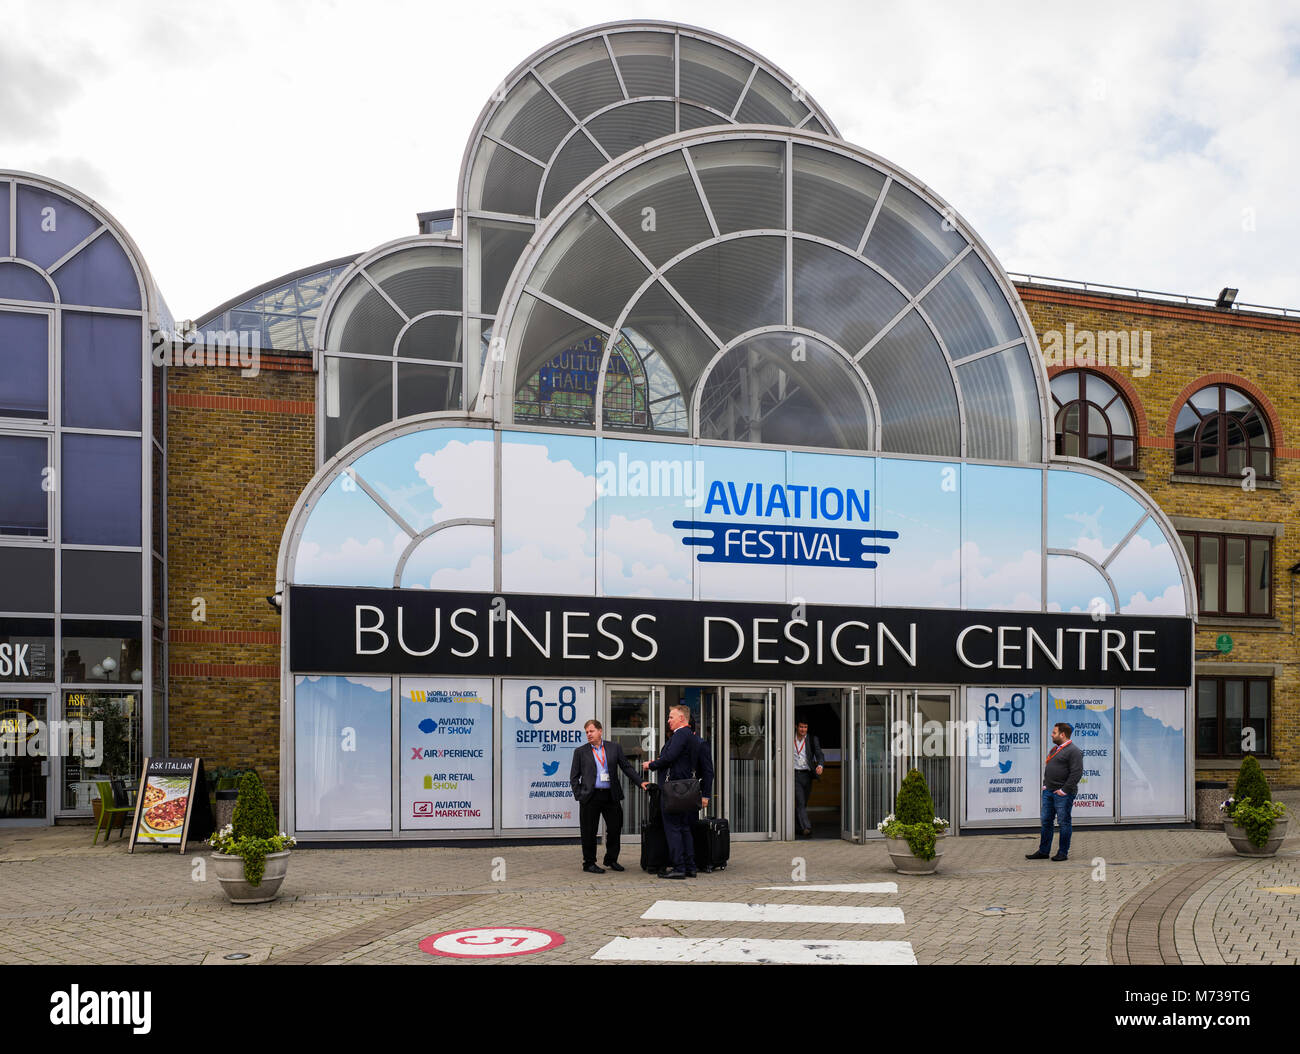 Businessmen await taxis outside the 'Aviation Festival' at London's Business Design Centre in Islington.  September 2017. Stock Photo